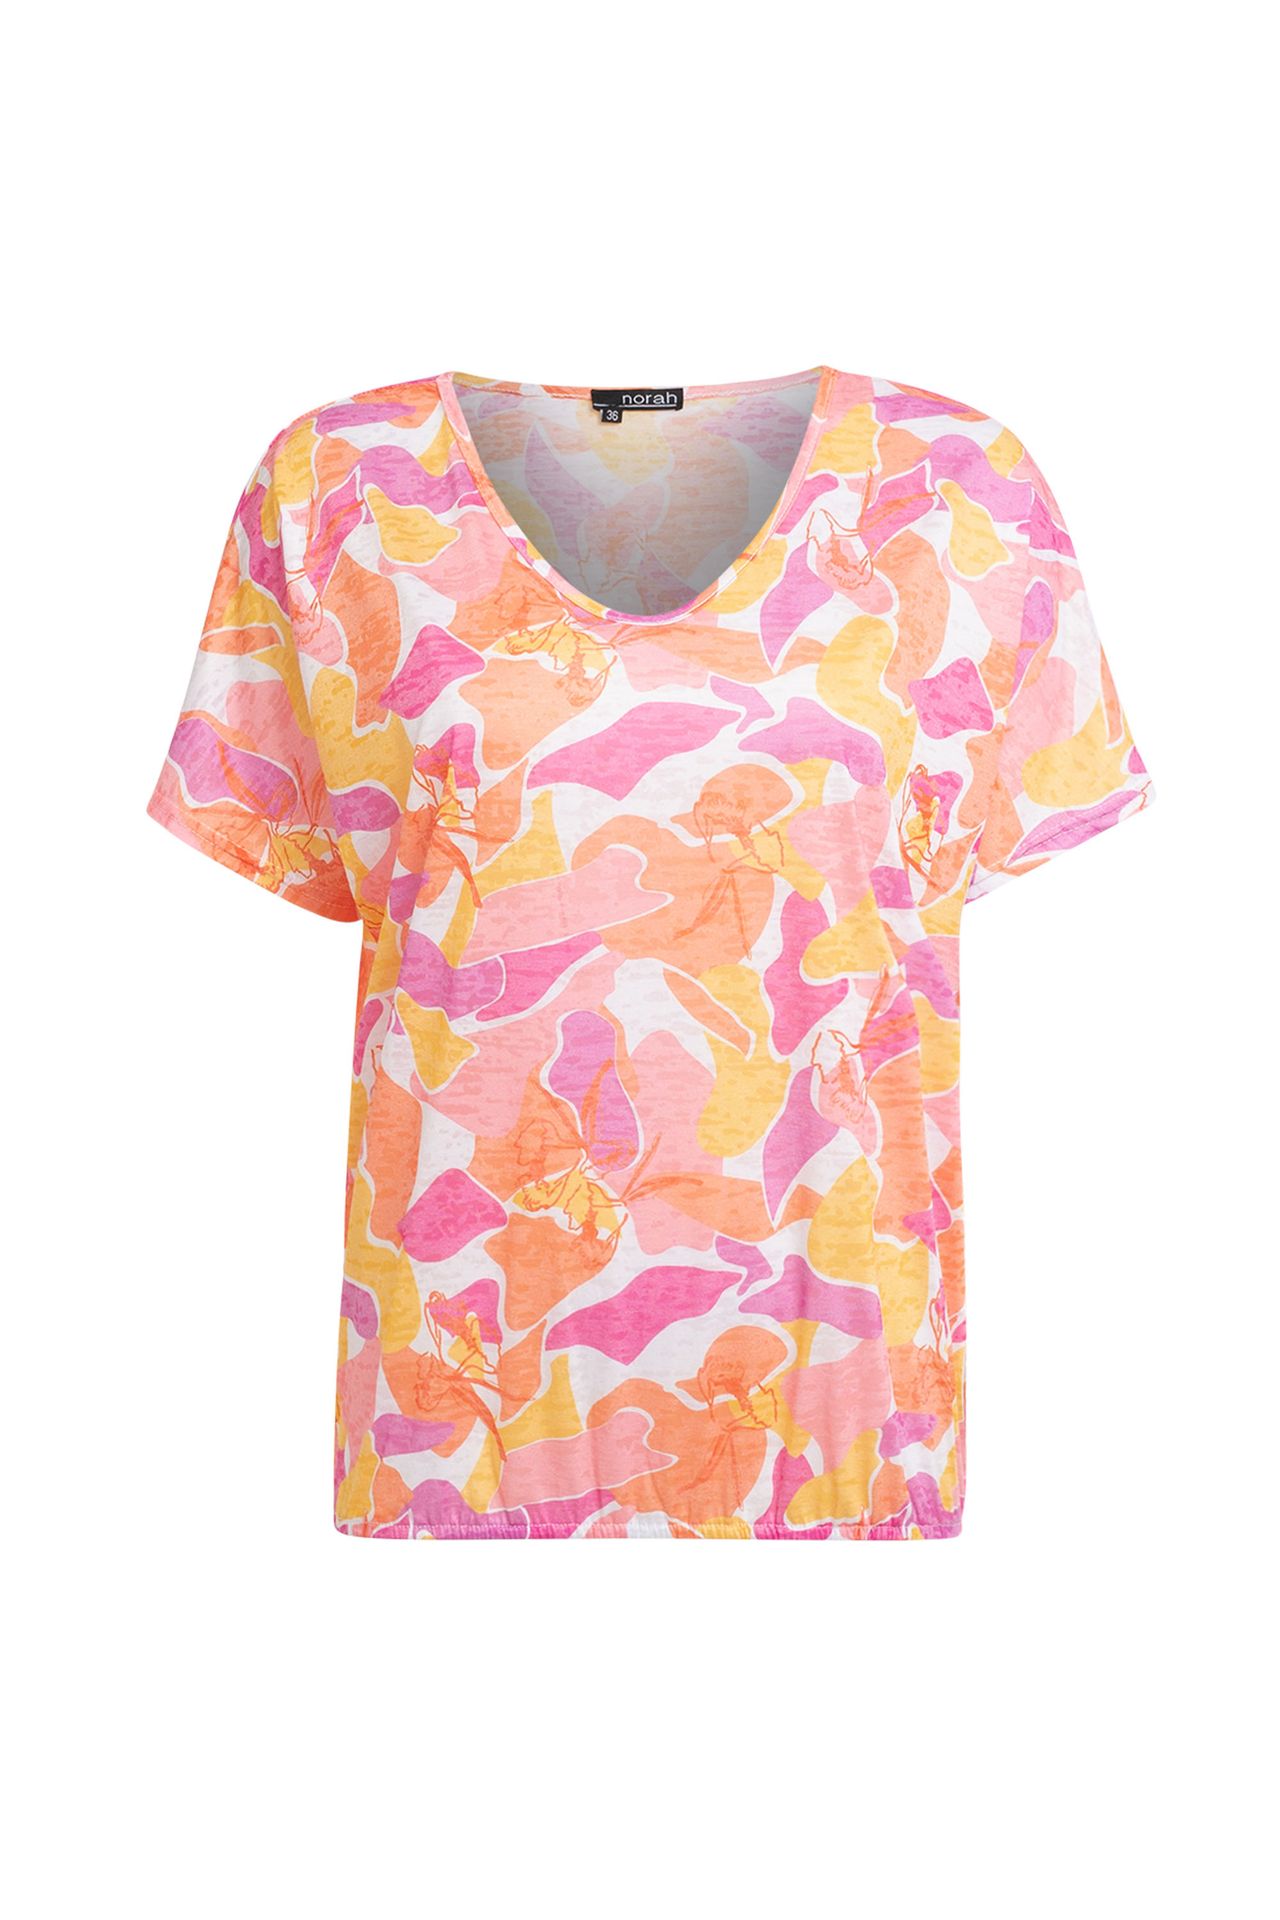 Norah Shirt roze multi pink multicolor 210012-920